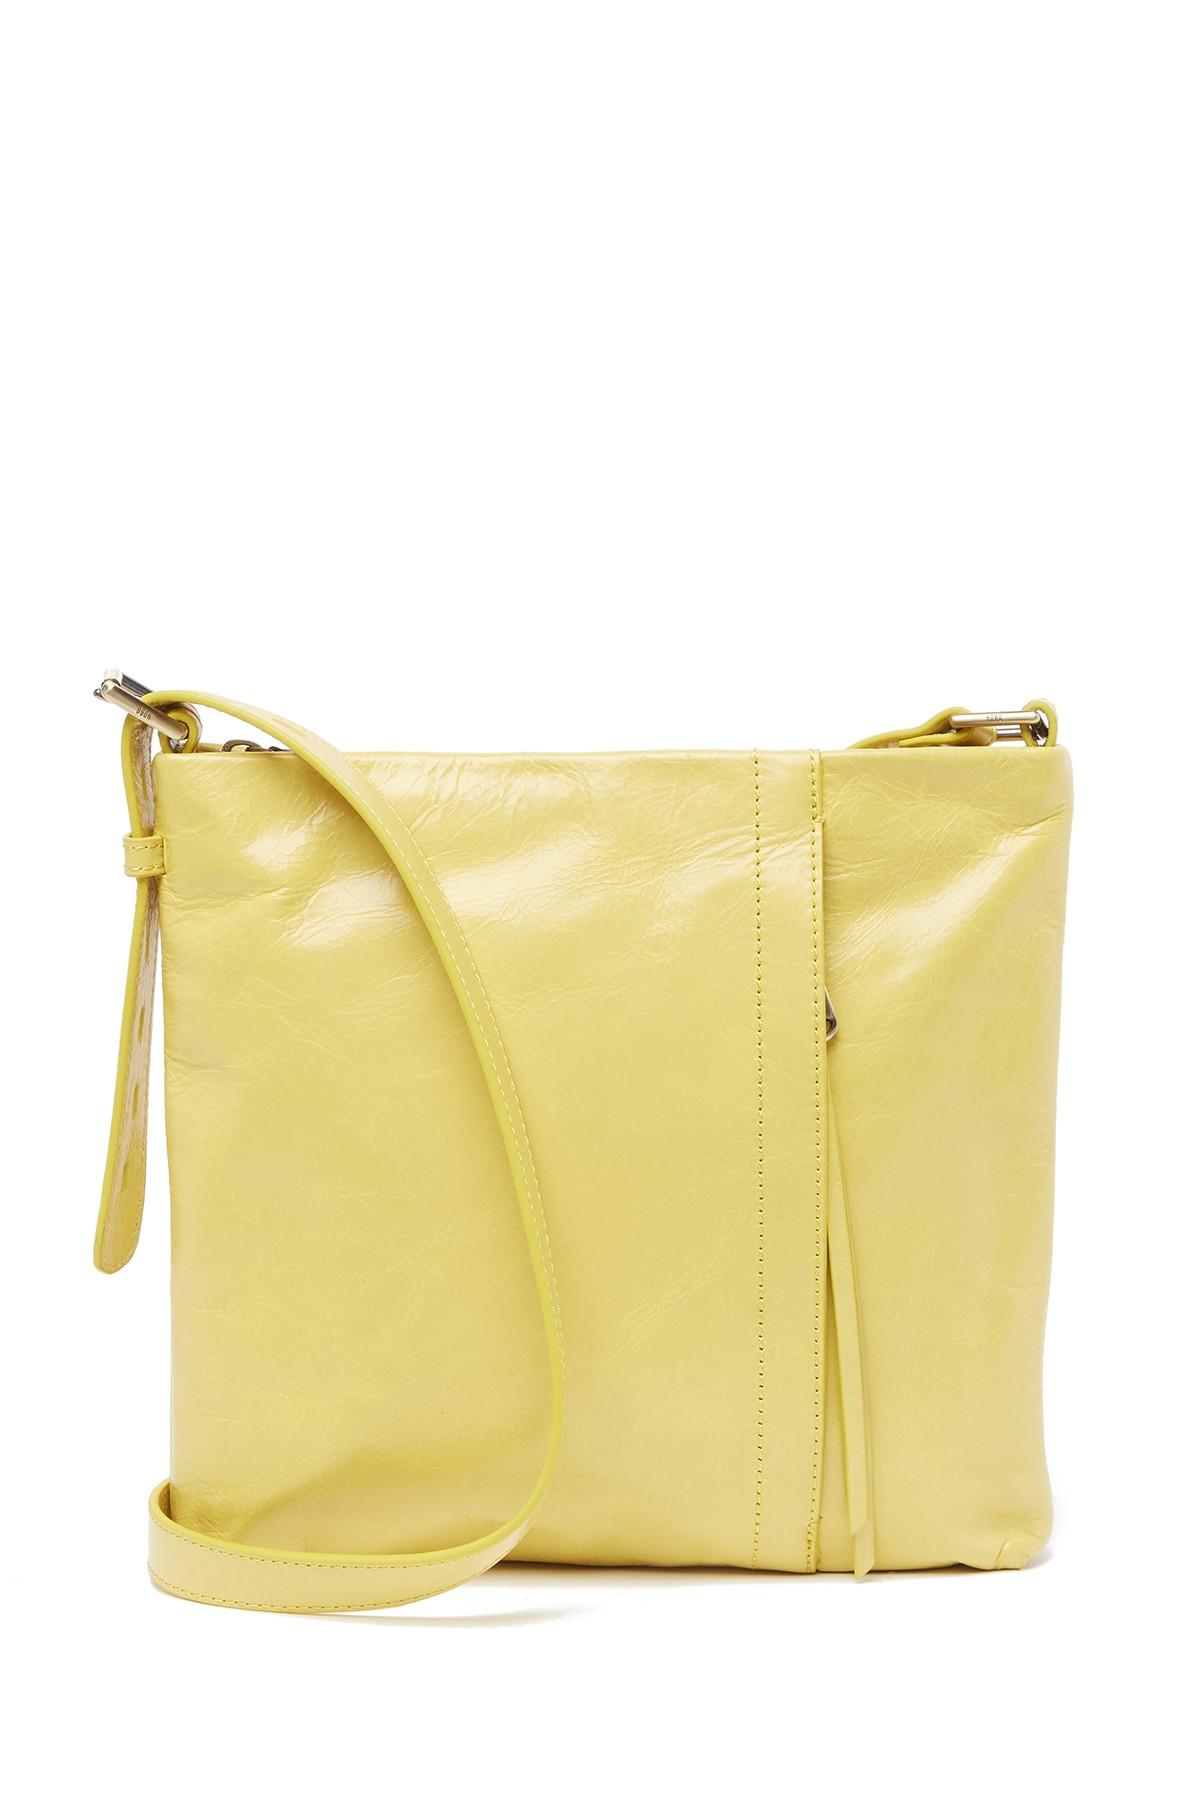 Hobo Drifter Leather Crossbody Bag in Yellow - Lyst